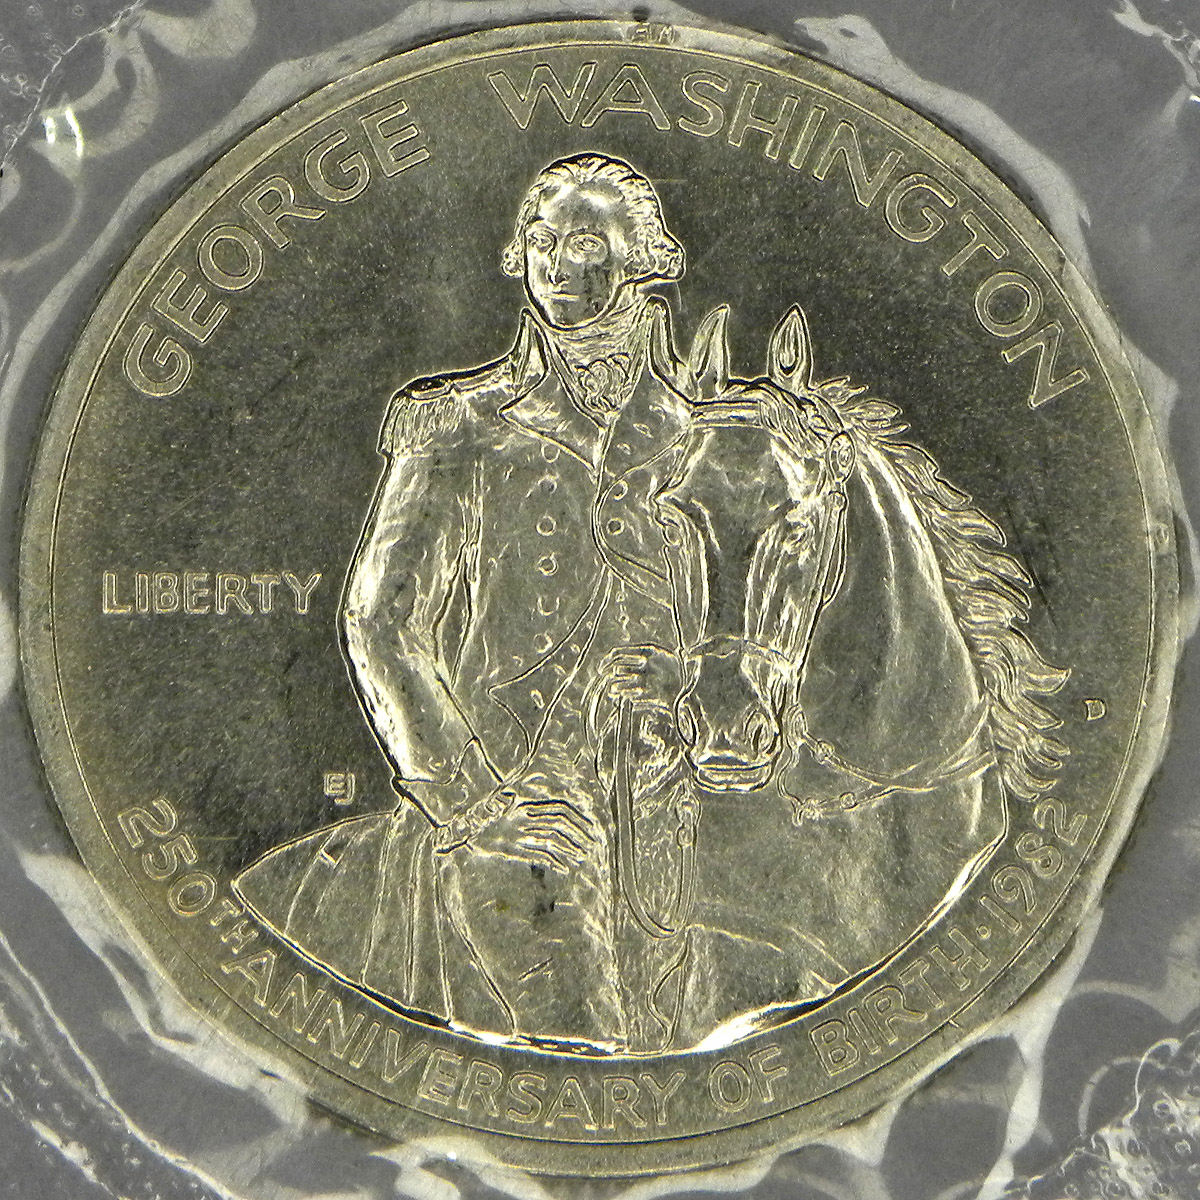 1982 George Washington Half Dollar (obverse)